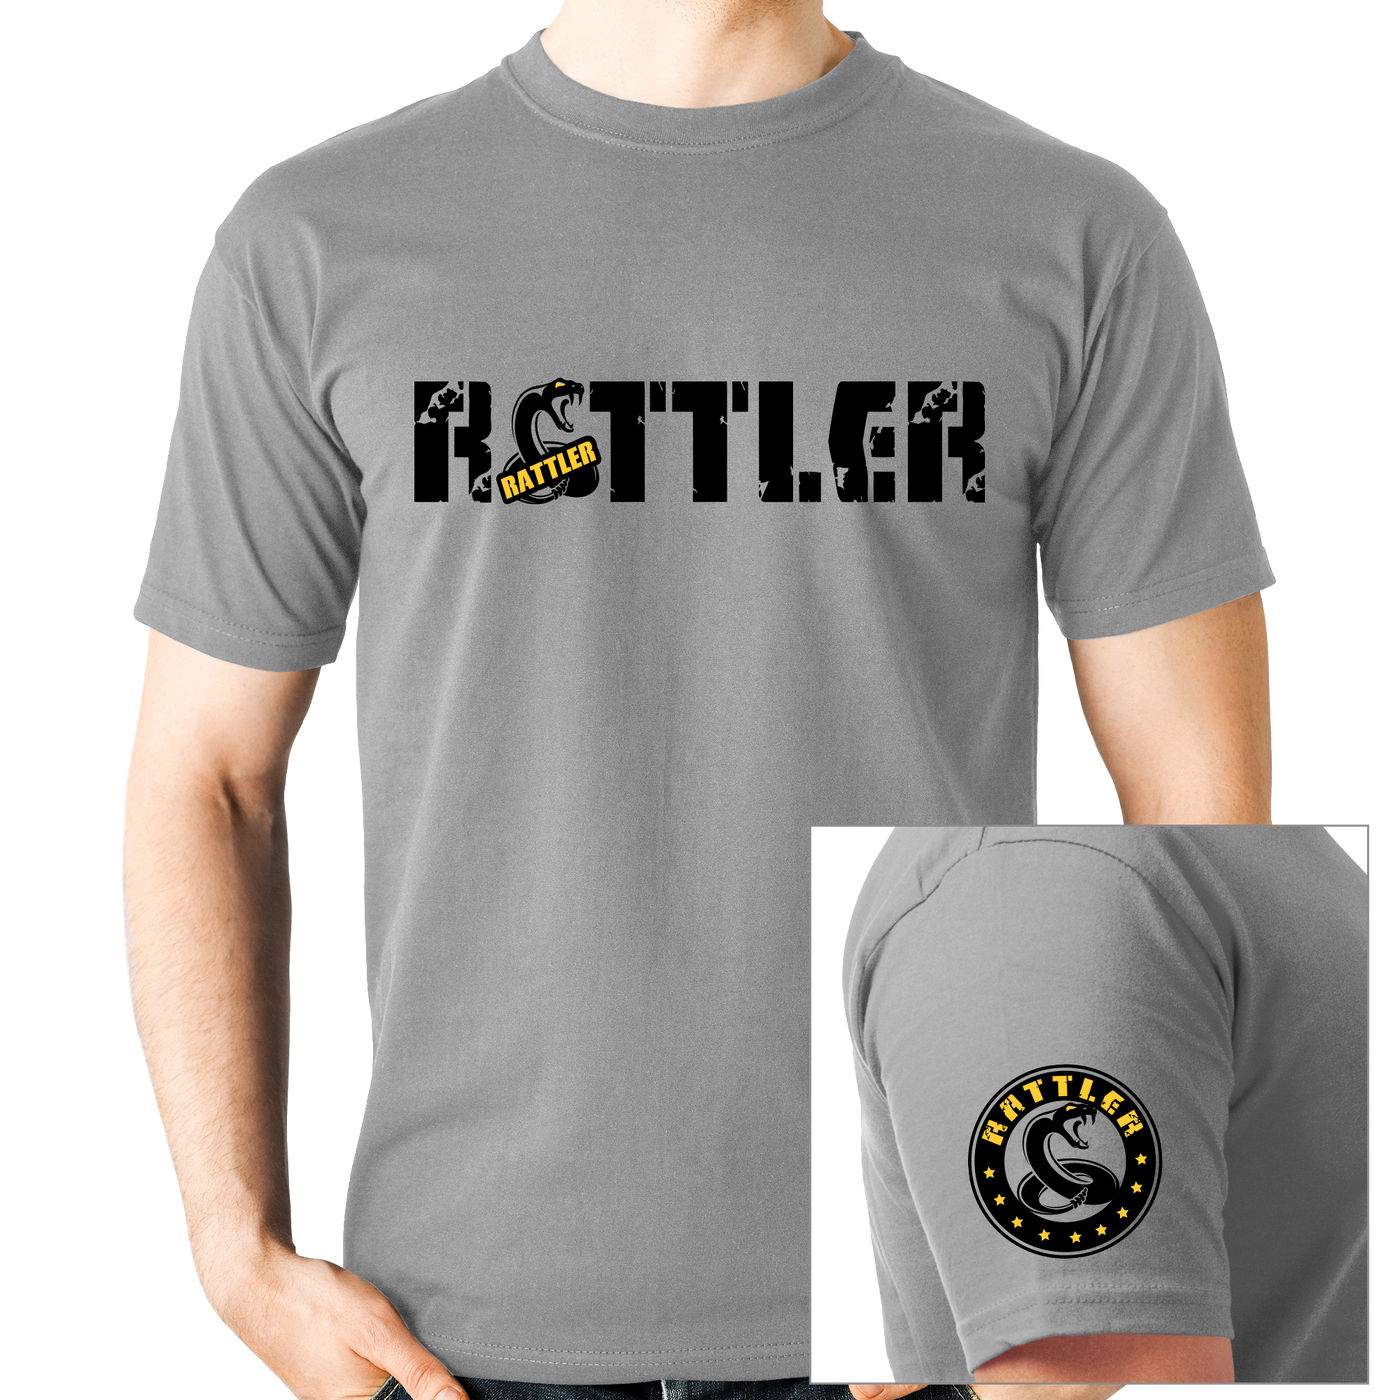 BW Blacksmith (Rattler) Cotton T-Shirt: Concrete Grey